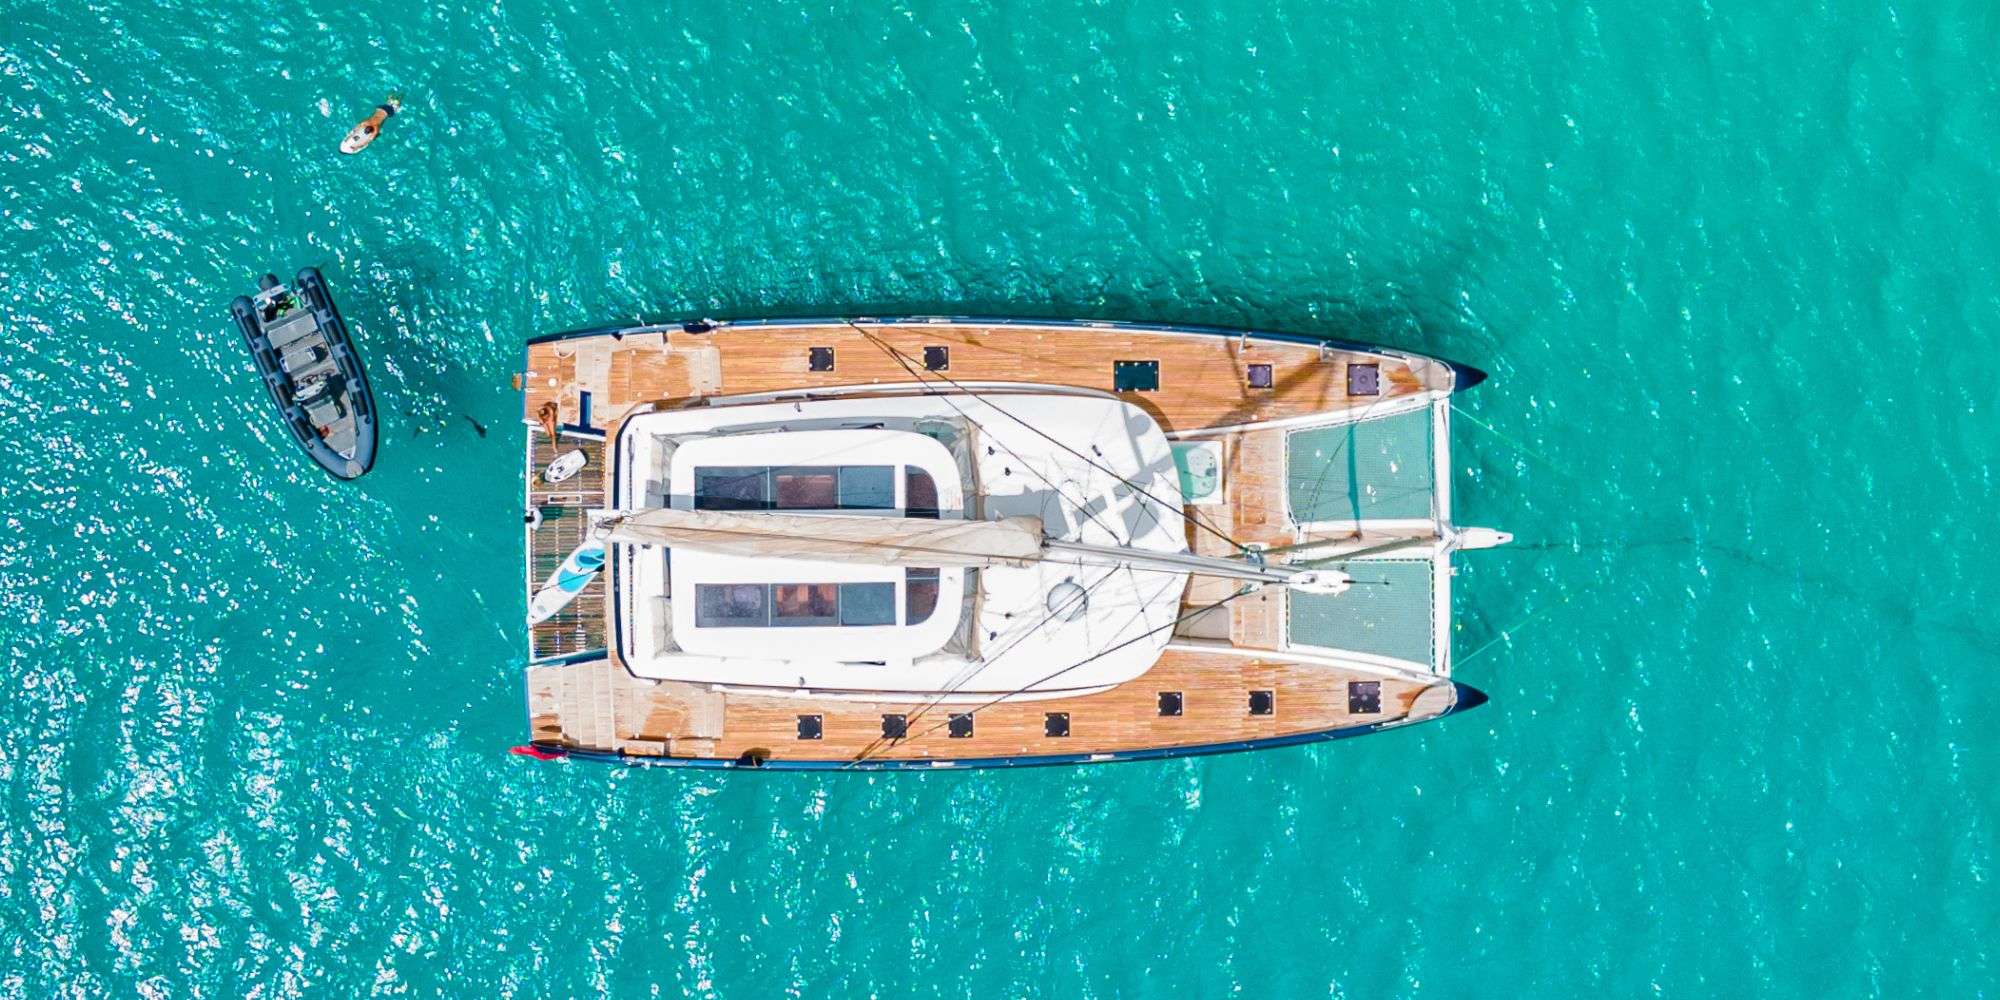 MANE ET NOCTE - Luxury yacht charter Maldives & Boat hire in Indian Ocean & SE Asia 2